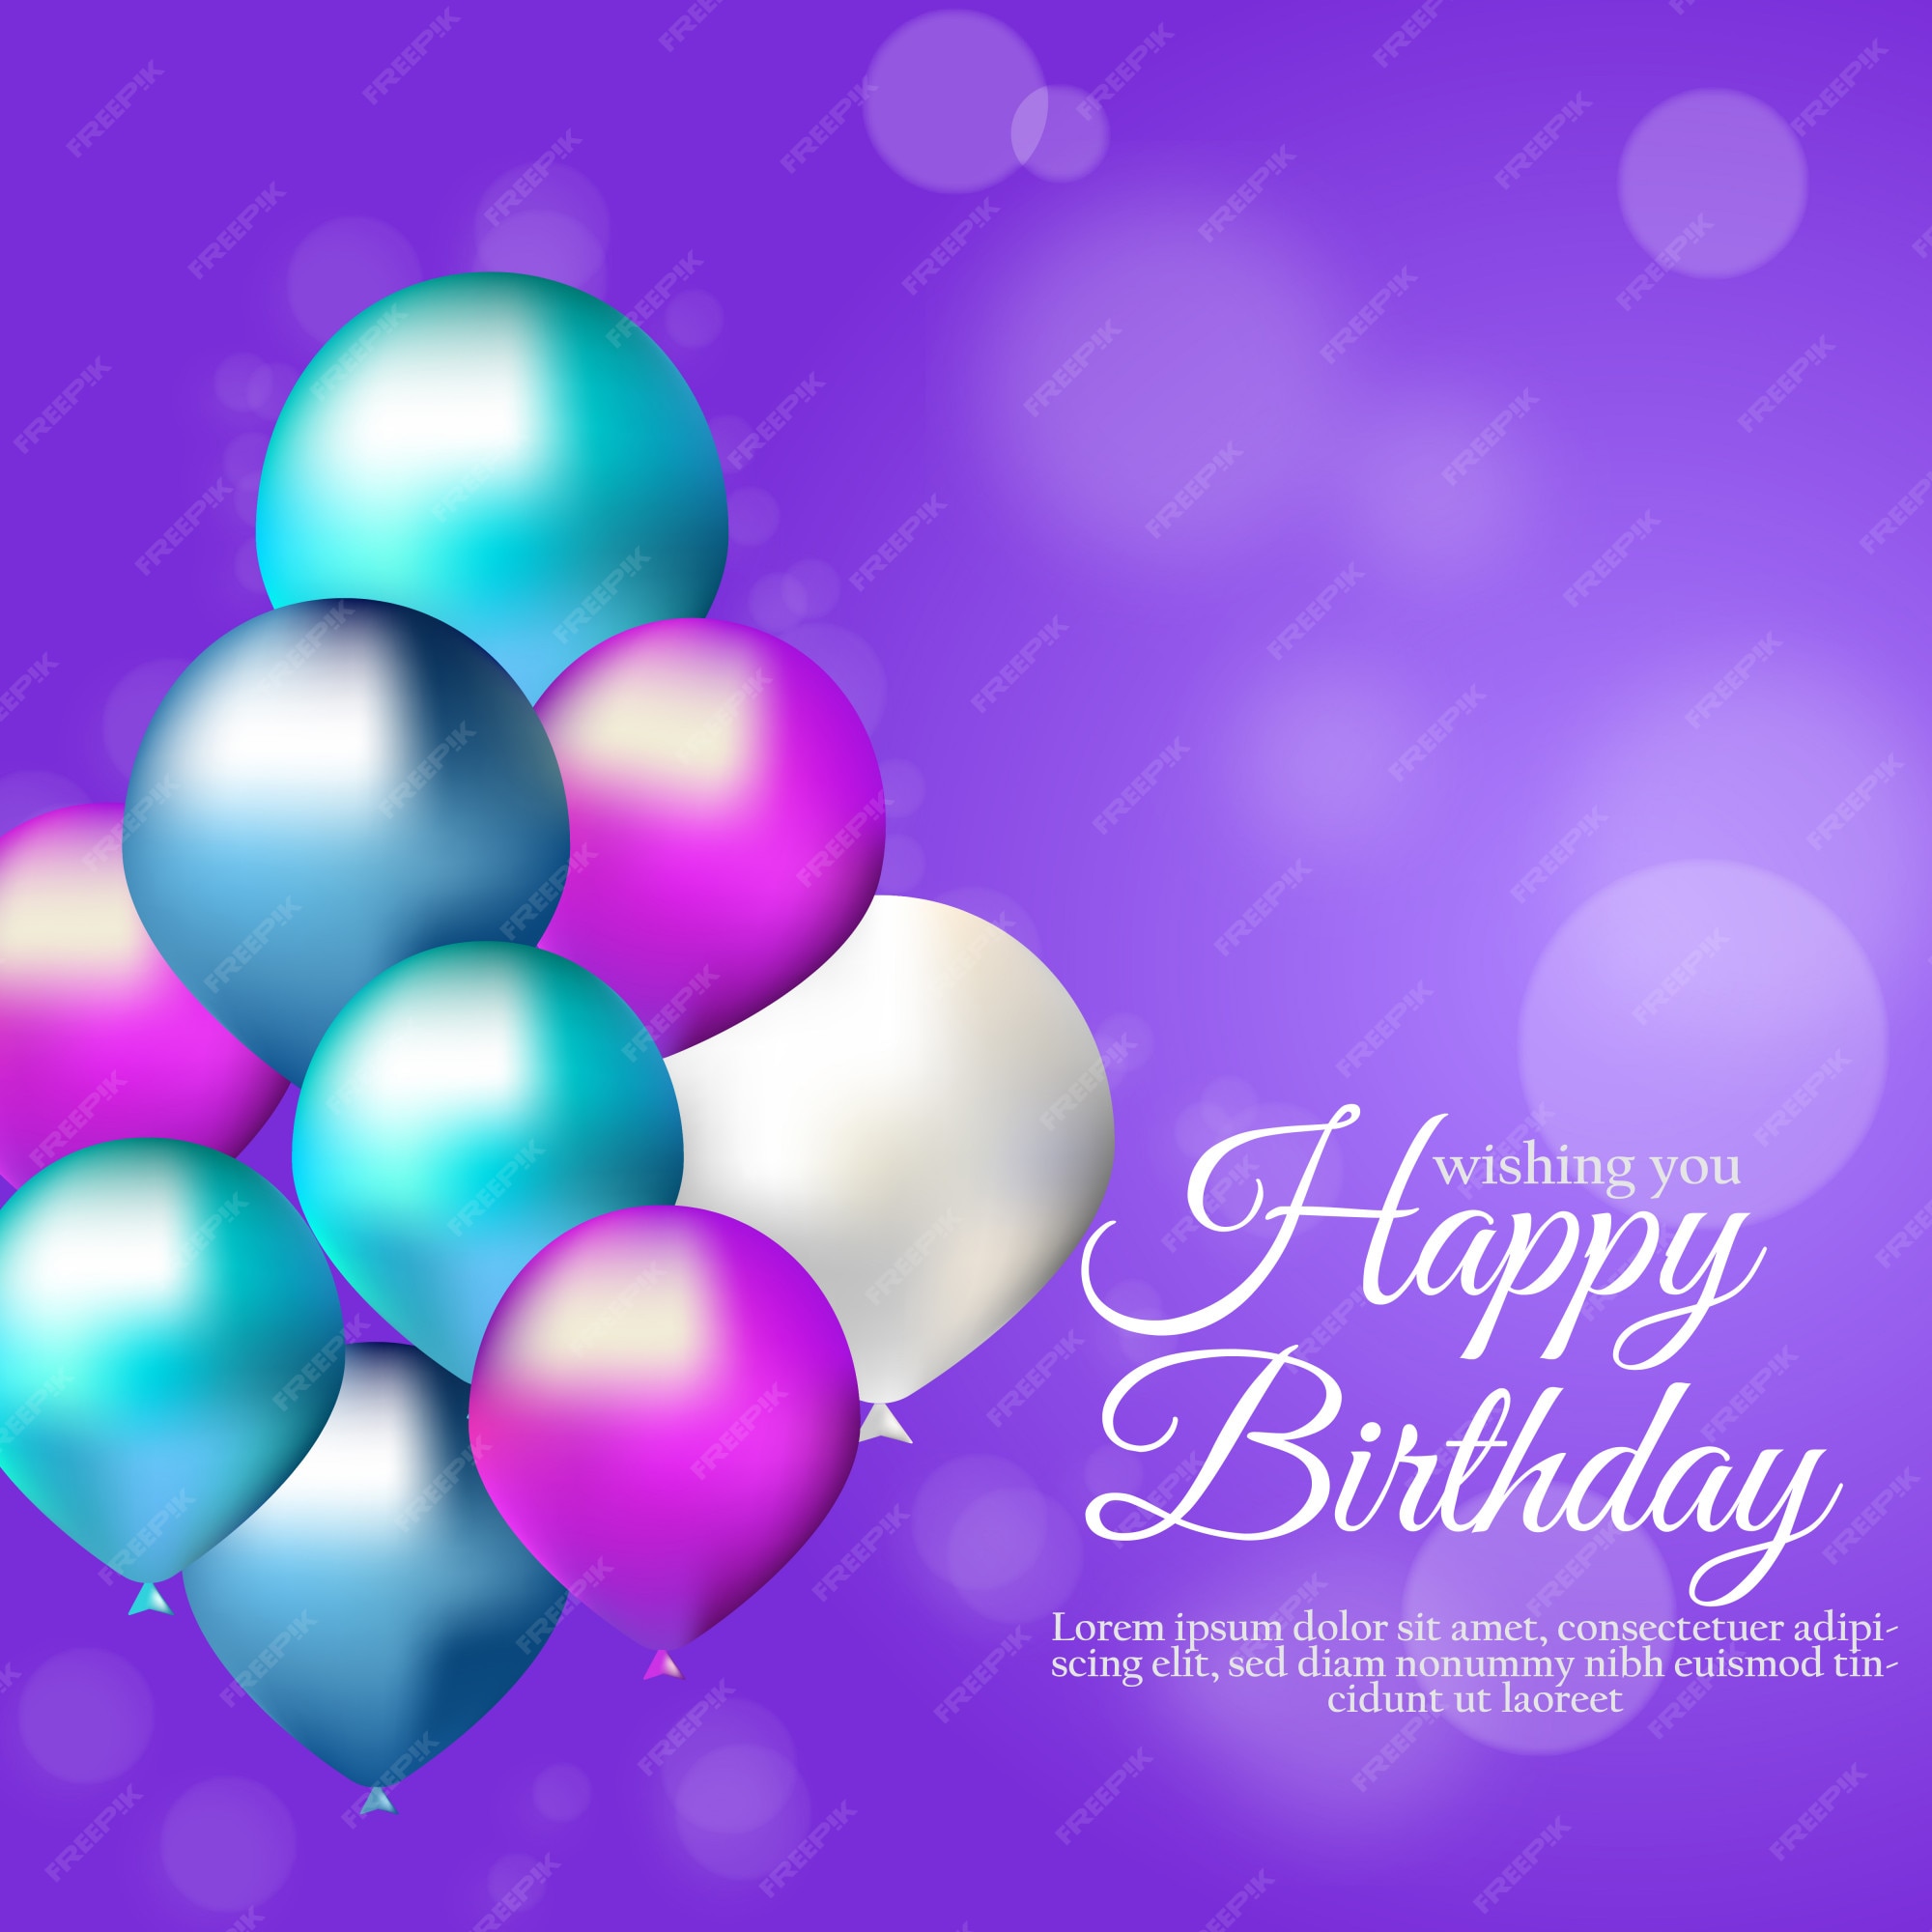 Premium Vector | Birthday invitation card with balloons